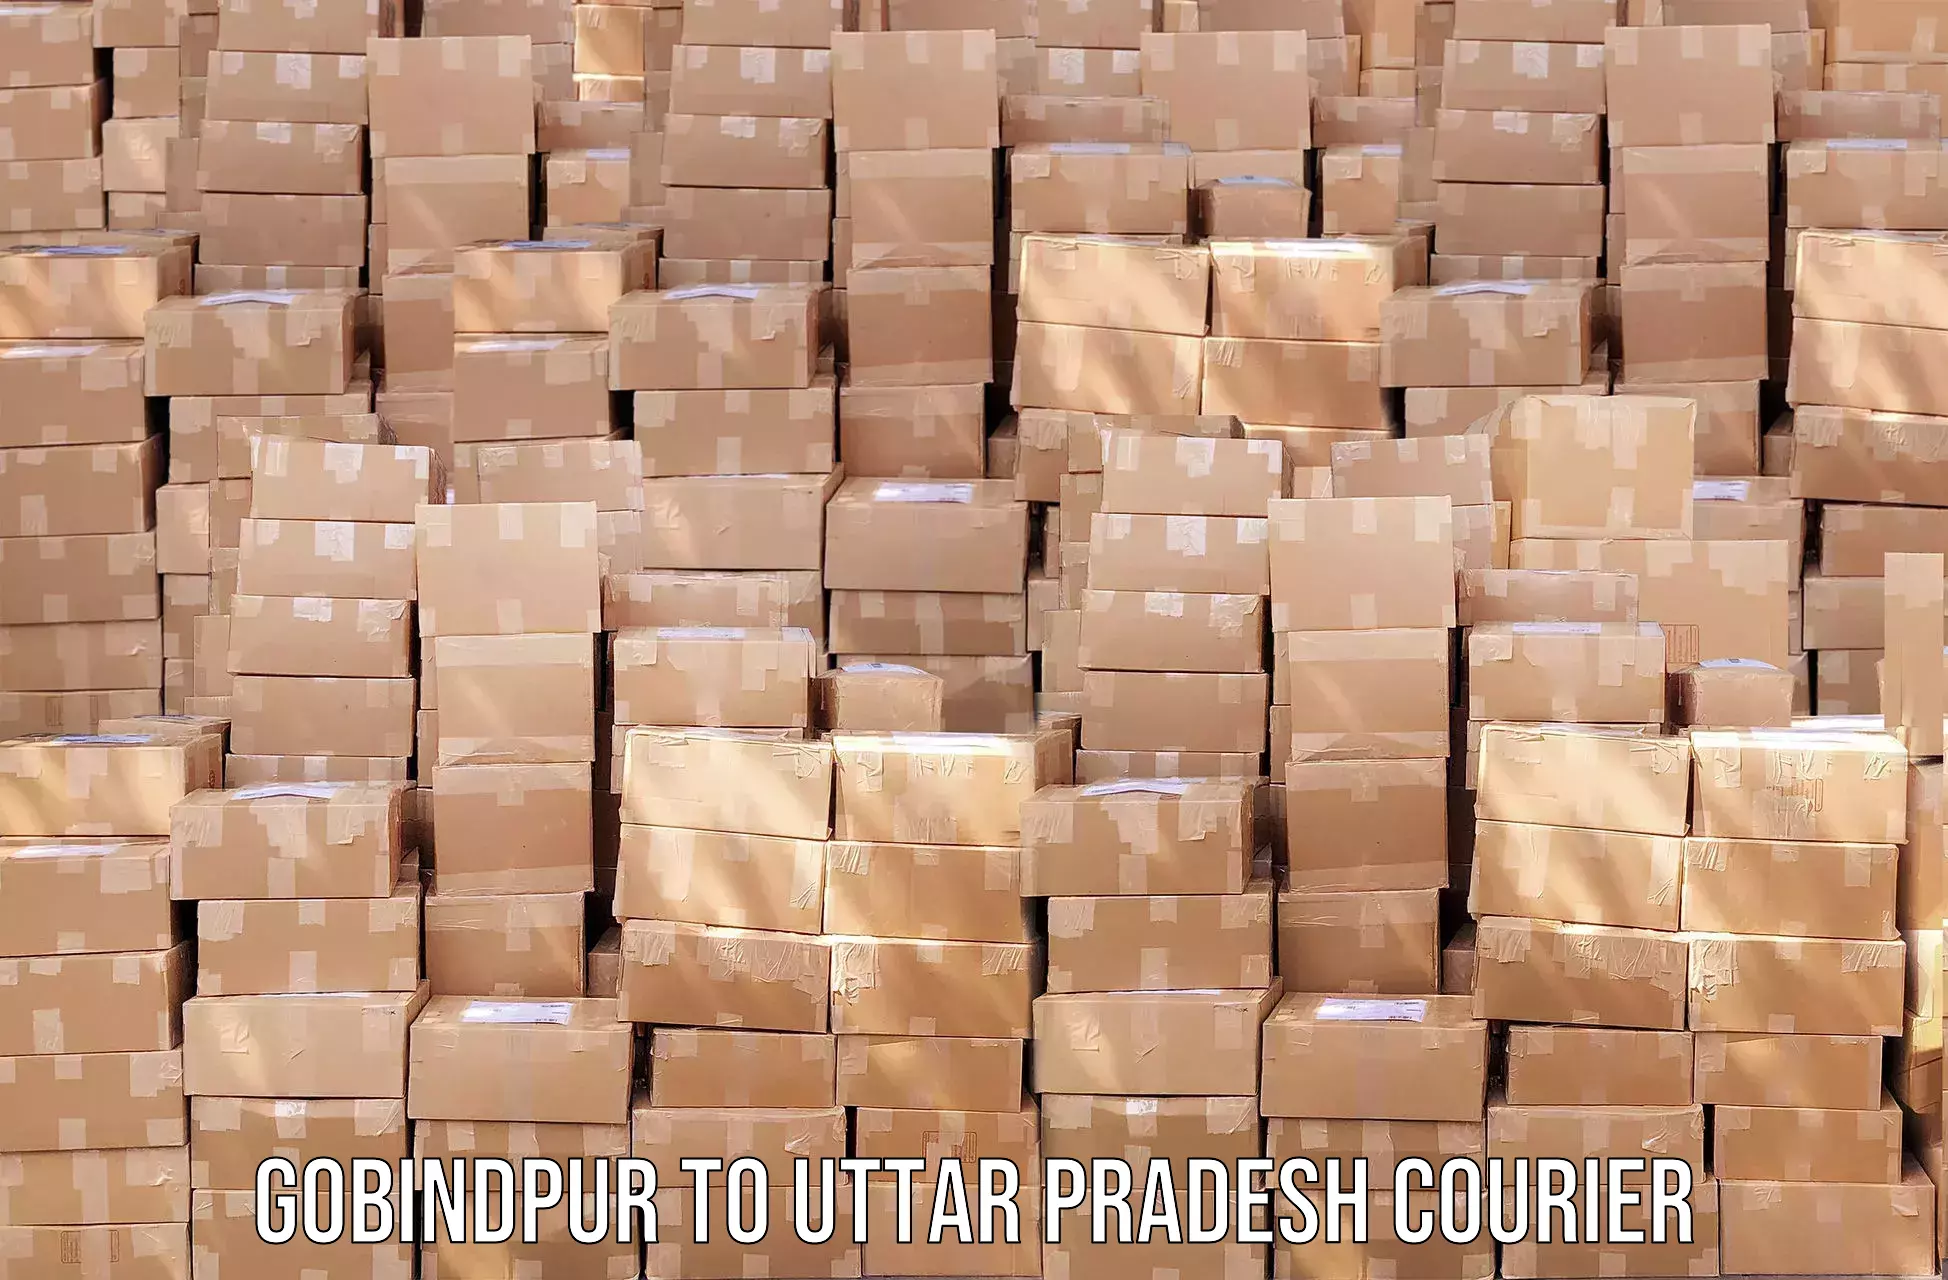 Digital courier platforms Gobindpur to Kurebhar